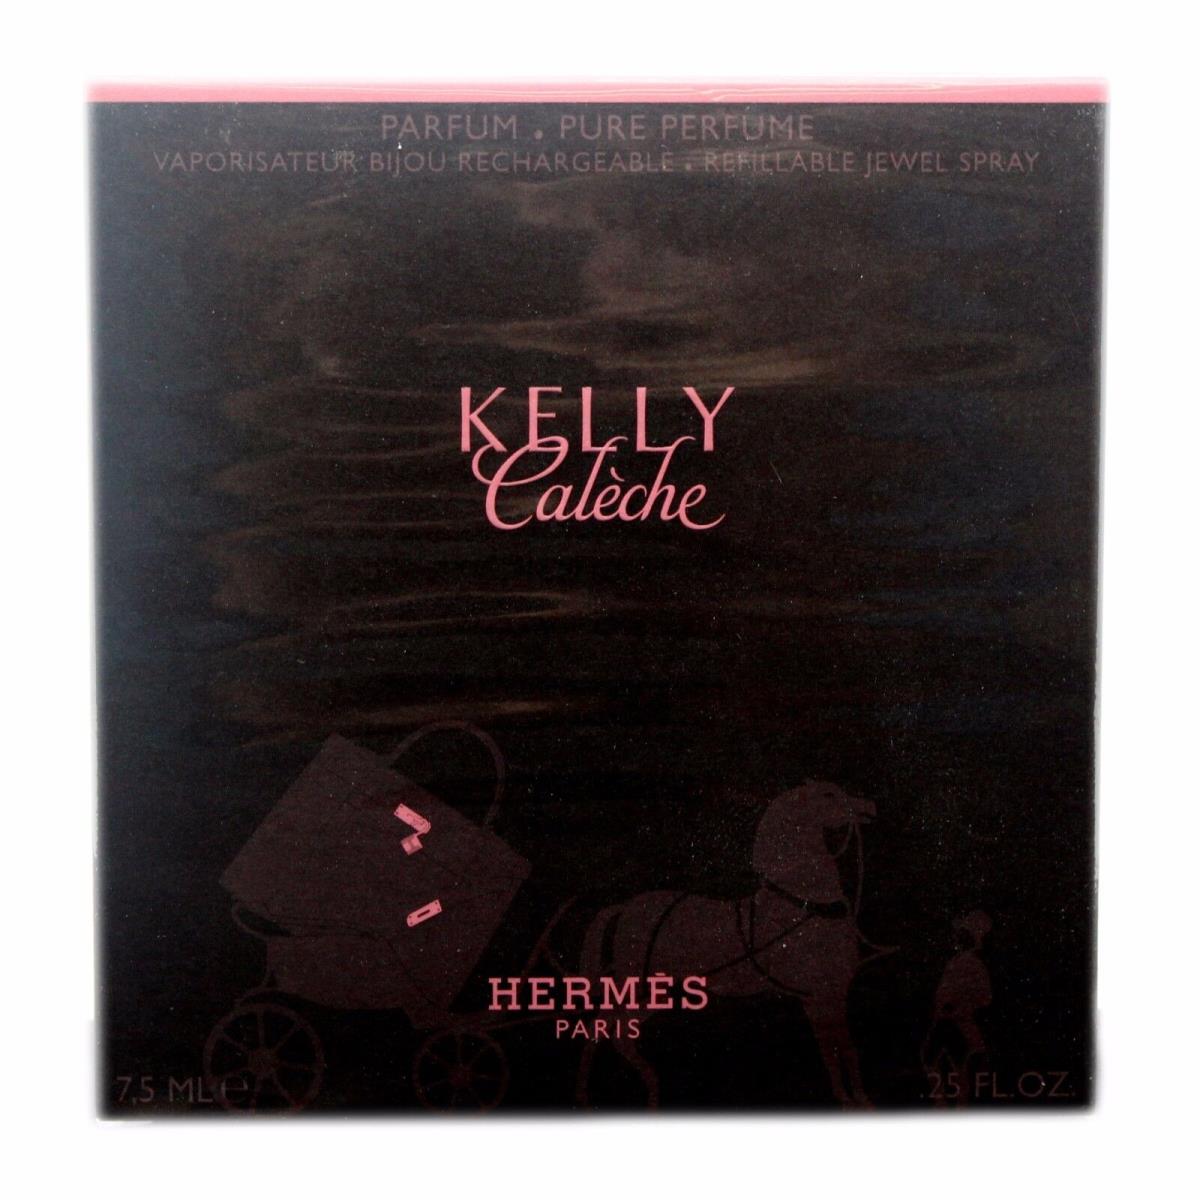 Hermes Kelly Caleche Parfum Refillable Jewel Spray 7.5 ML/0.25 Fl.oz. NIB-23367